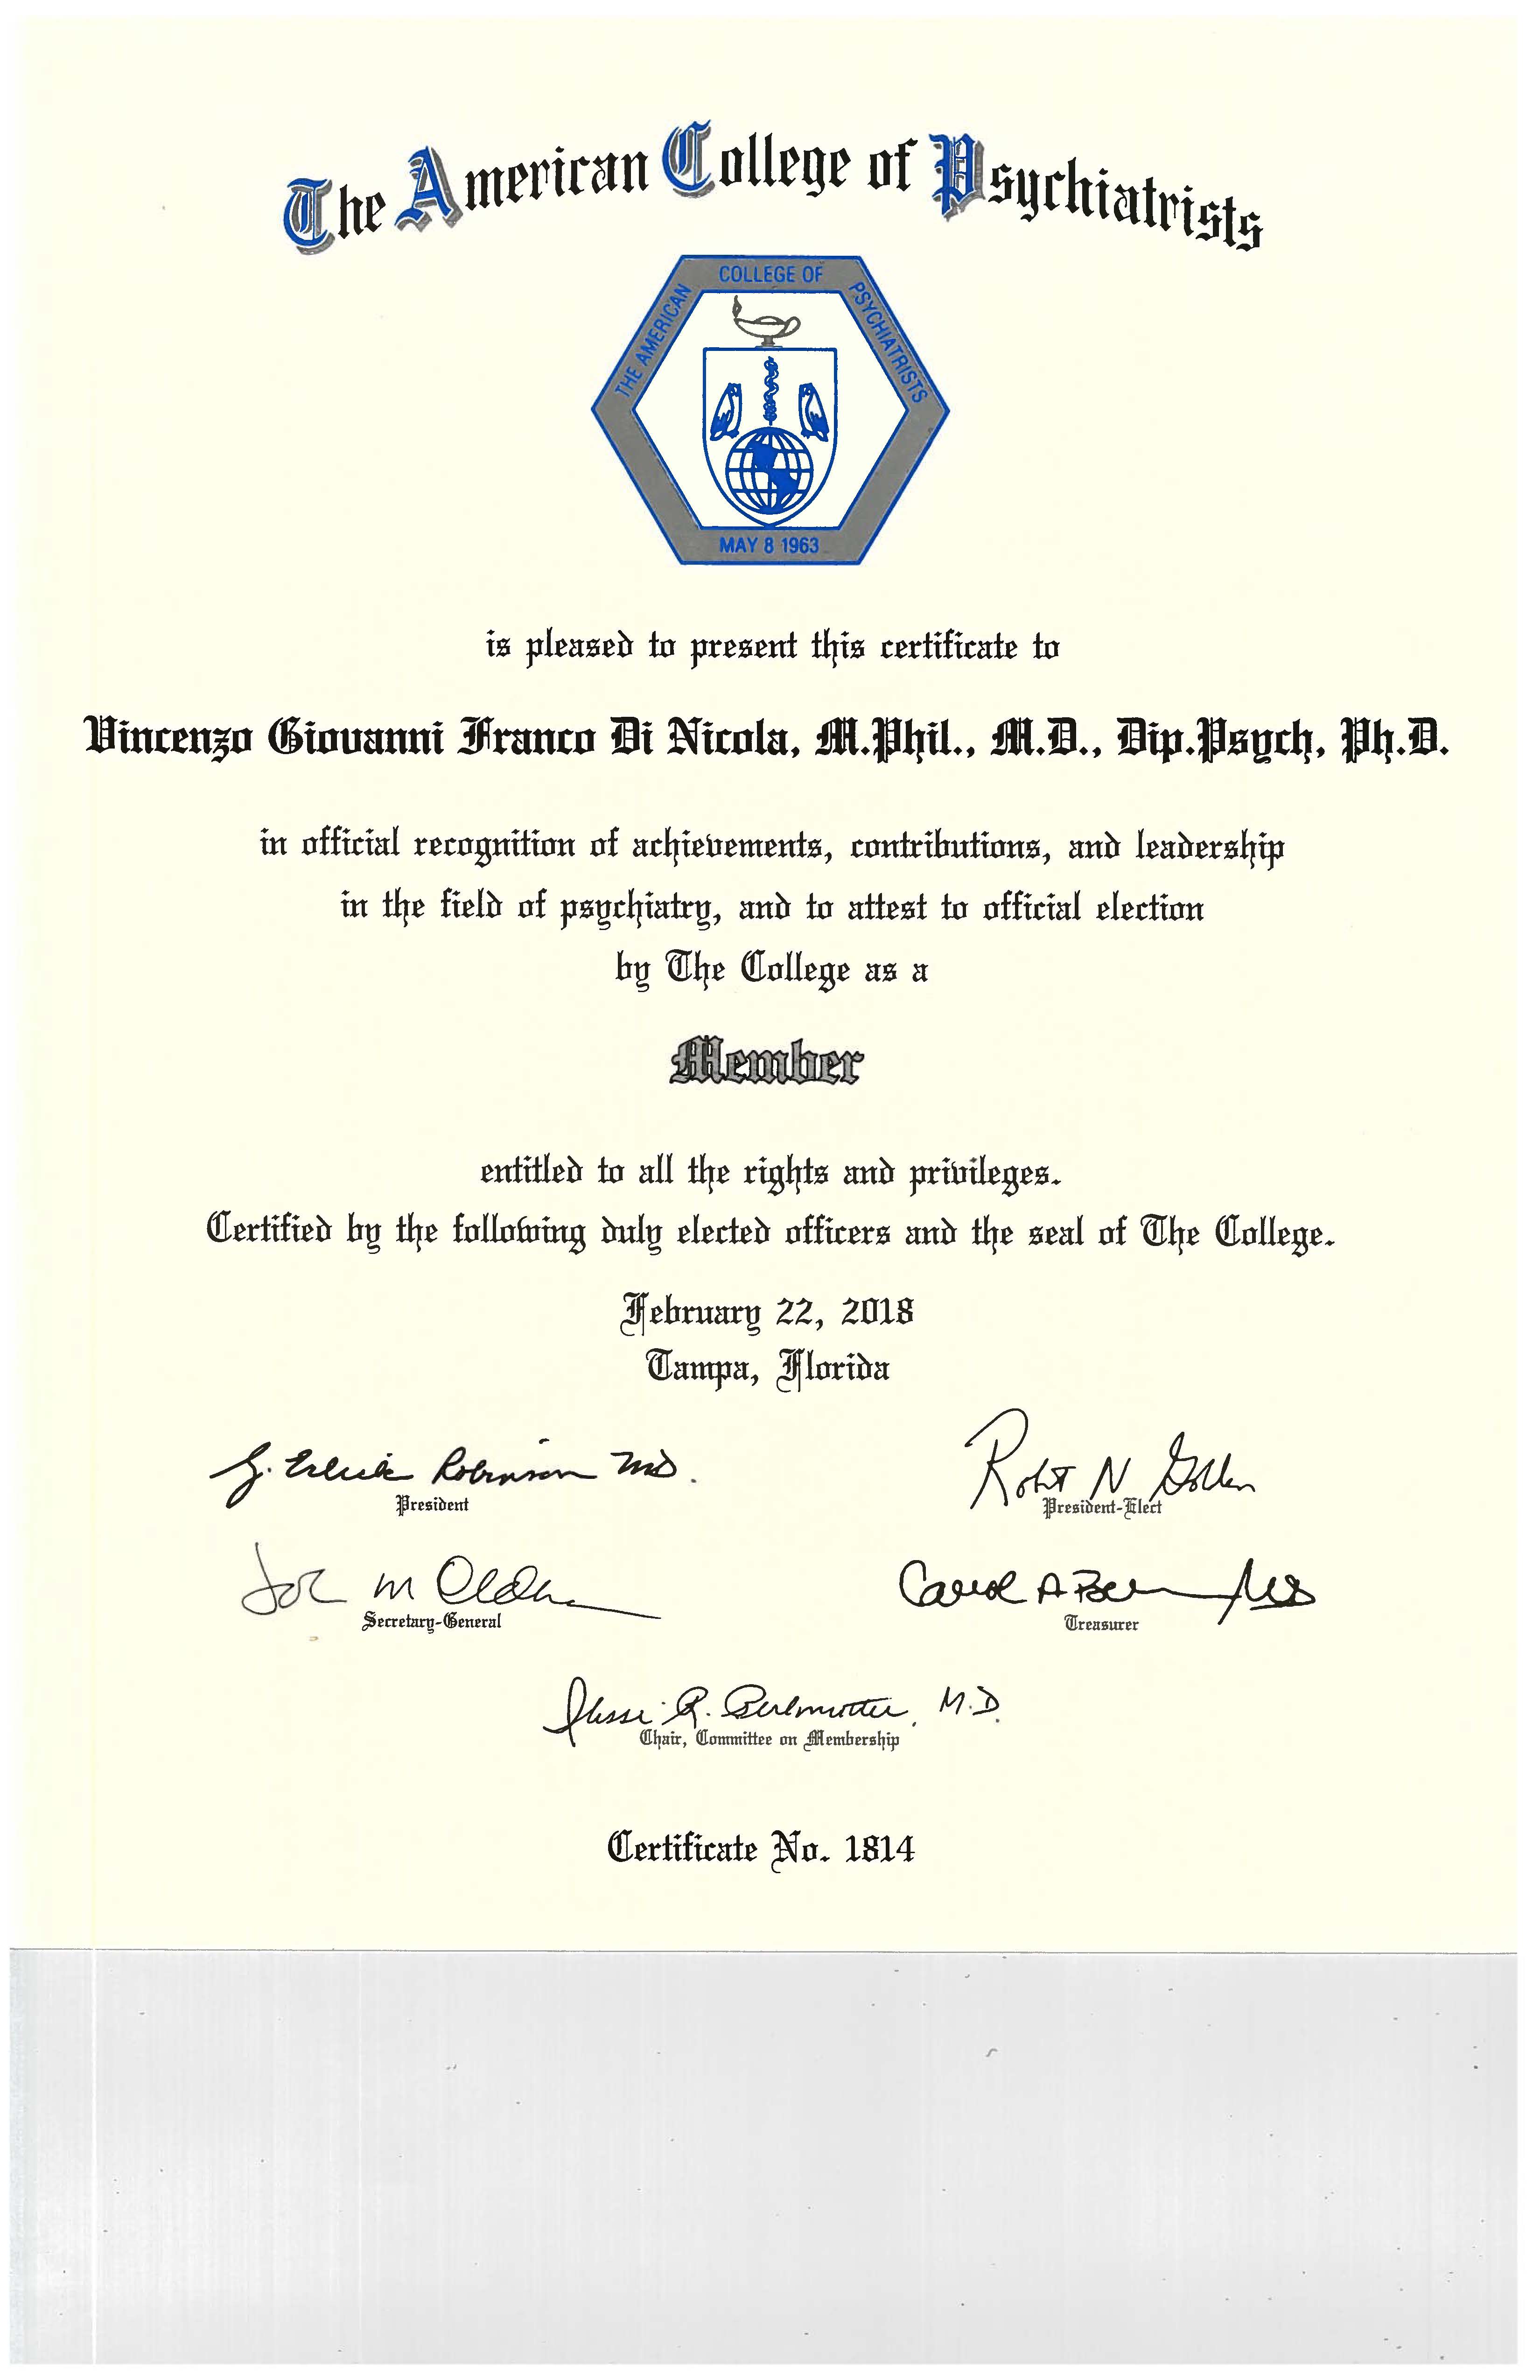 Member Certificate American College of Psychiatrists - Tampa, FL, USA - February 22, 2018 - Vincenzo Di Nicola